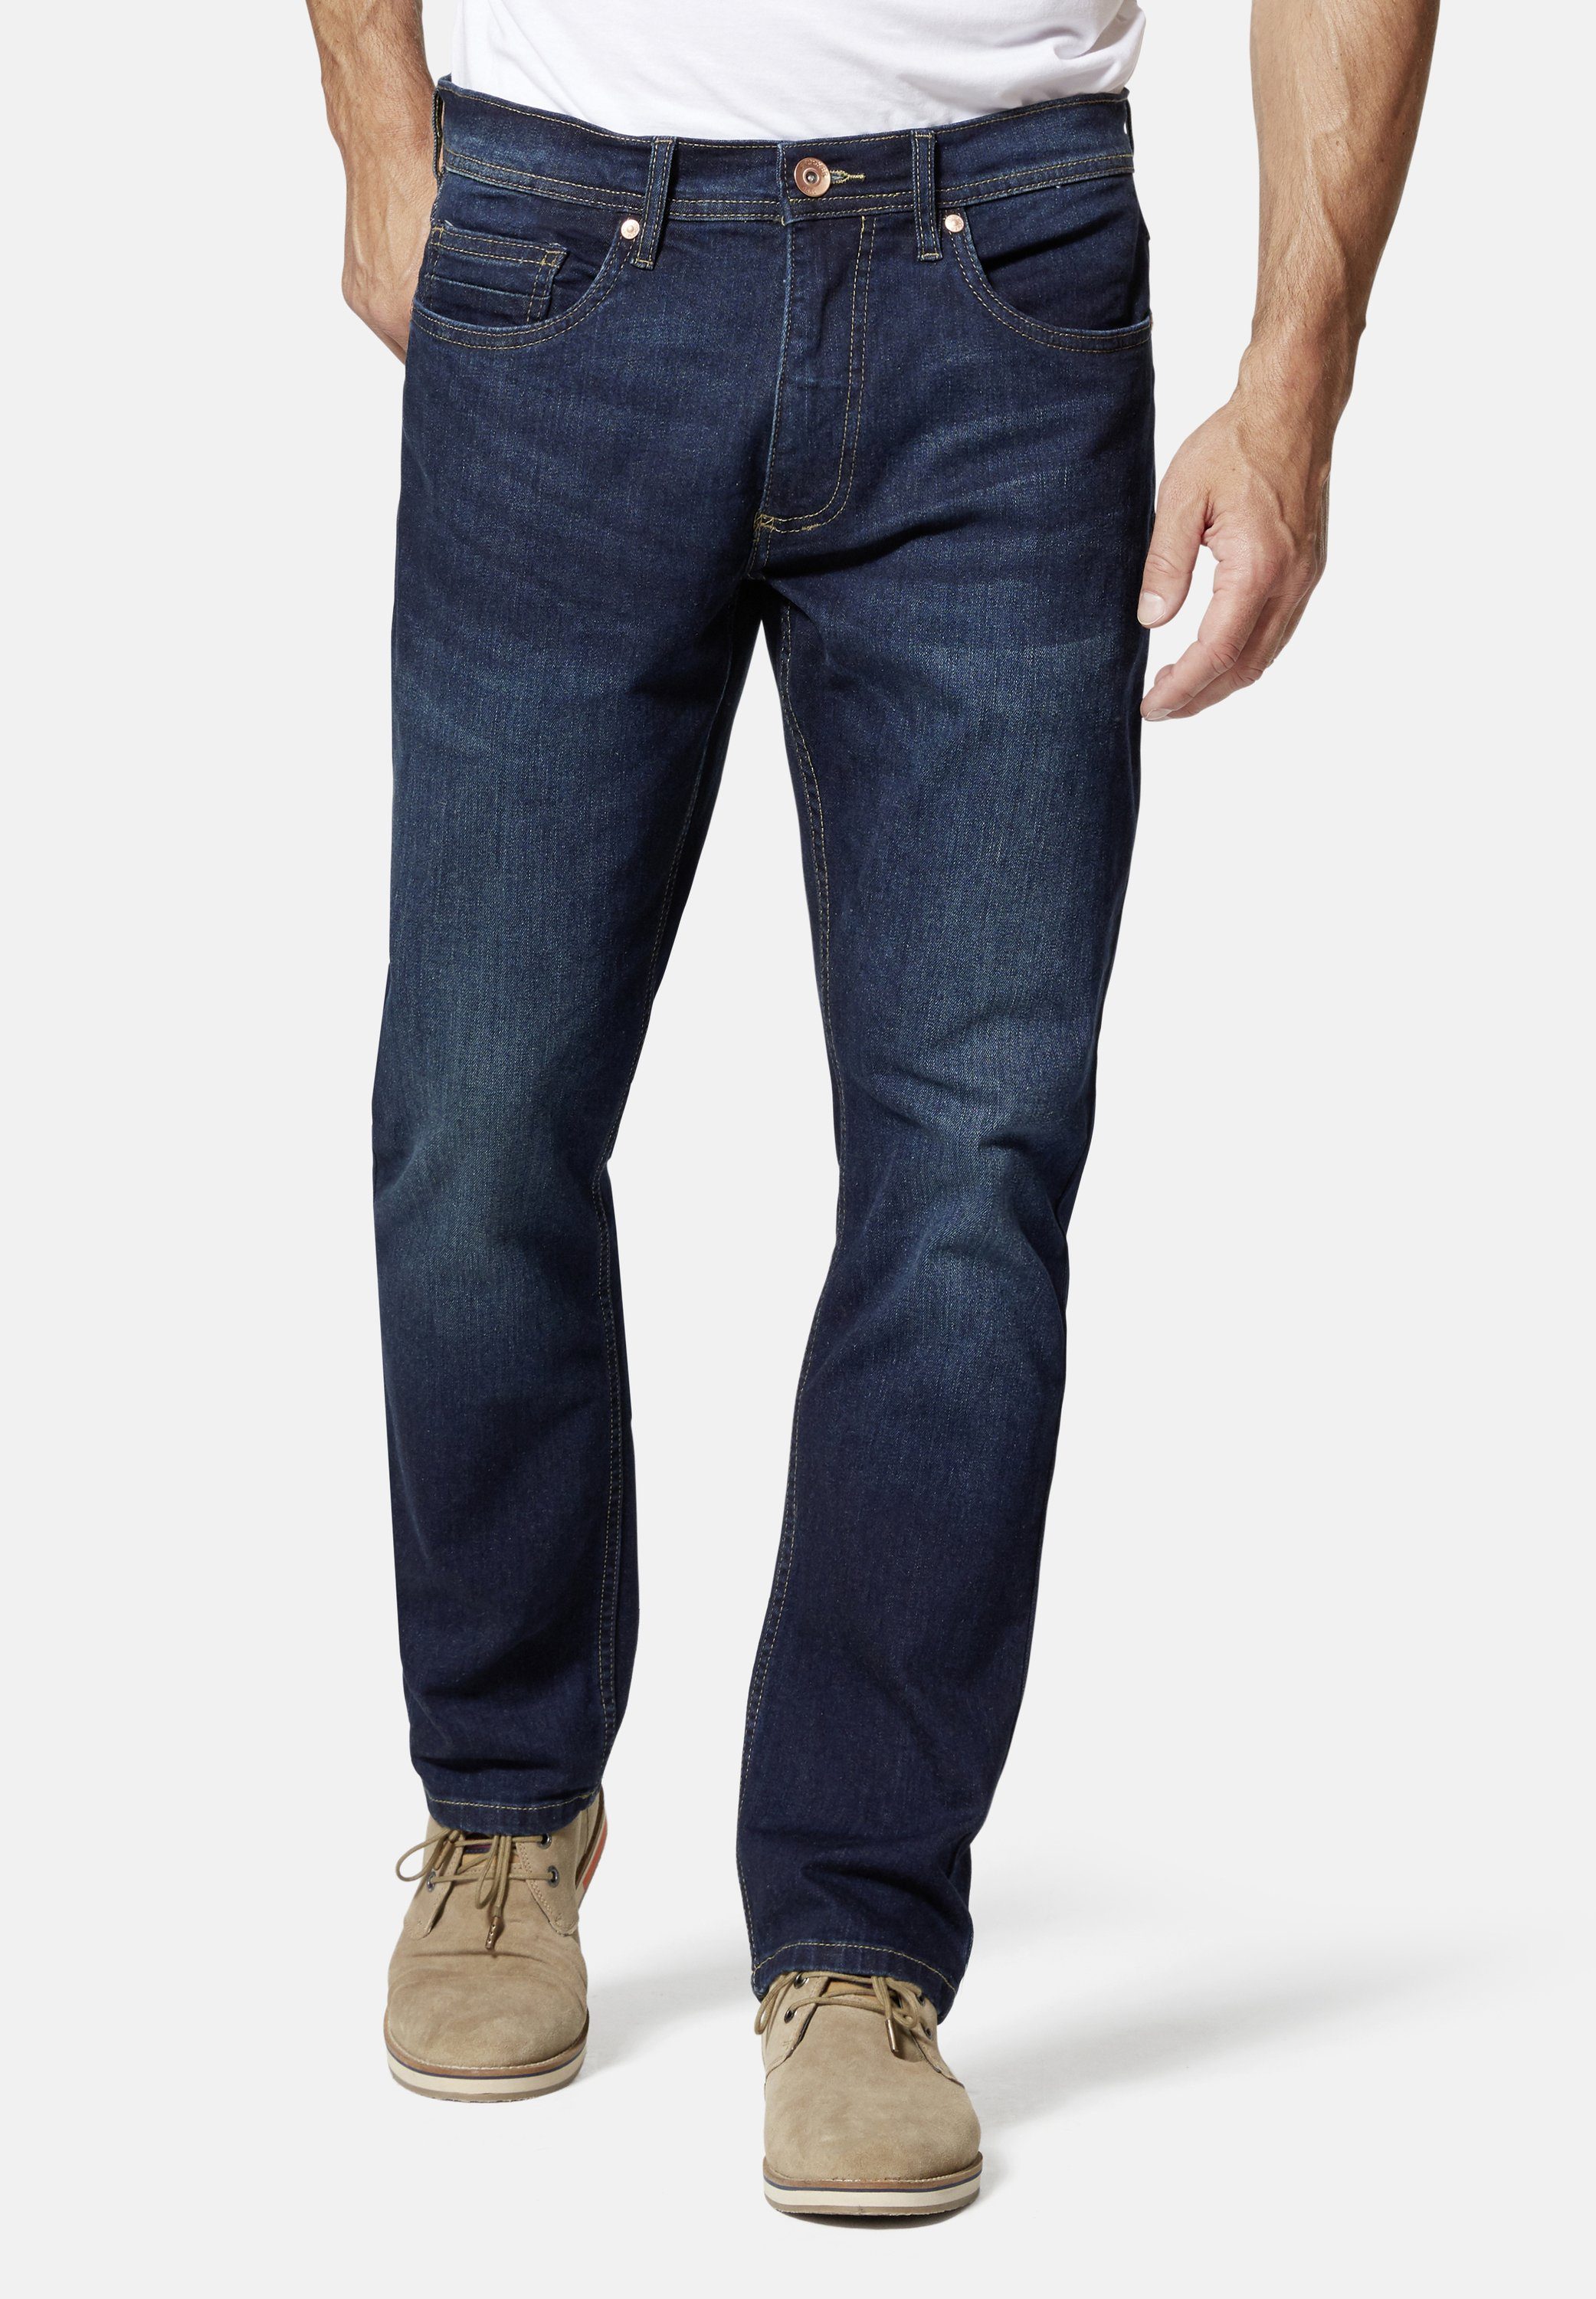 Stooker Men 5-Pocket-Jeans Glendale Denim Slim Straight Fit darkblue used